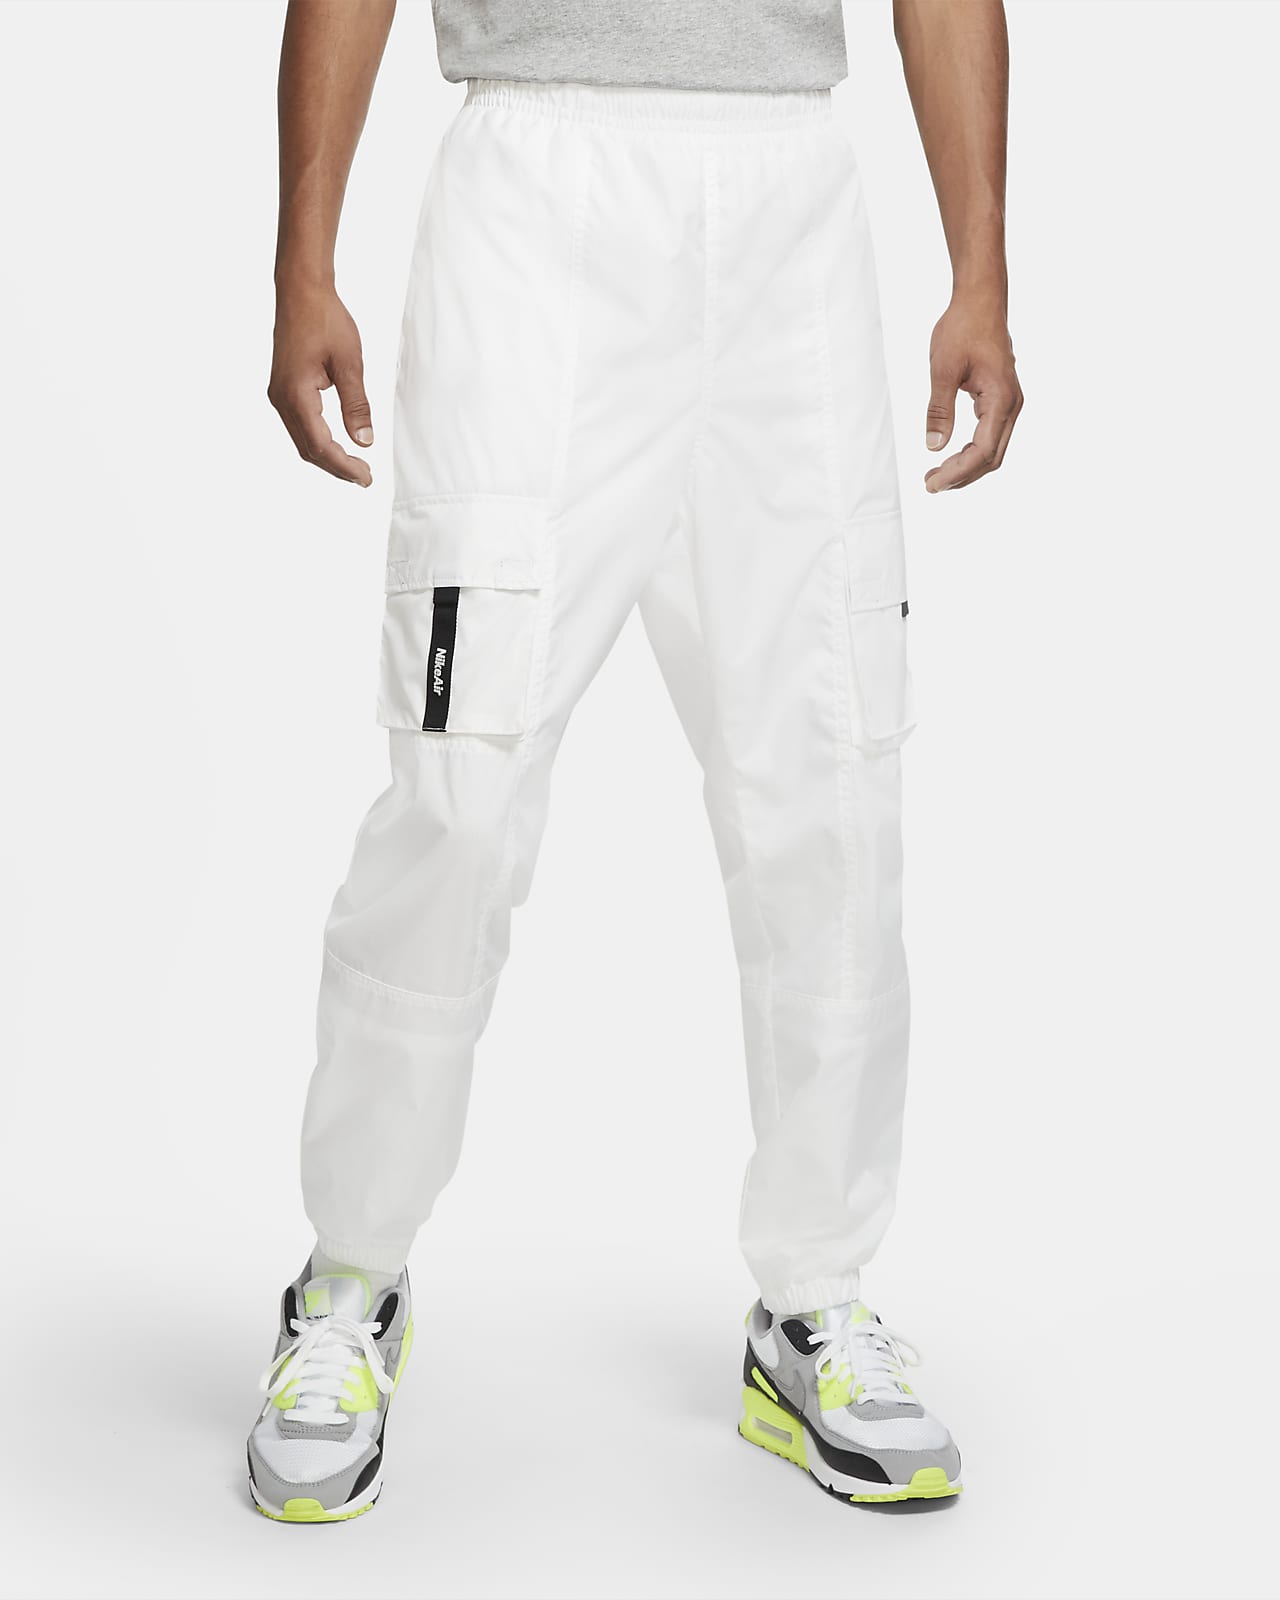 Bestuiven gemakkelijk reptielen Nike Air Men's Woven Pants. Nike.com